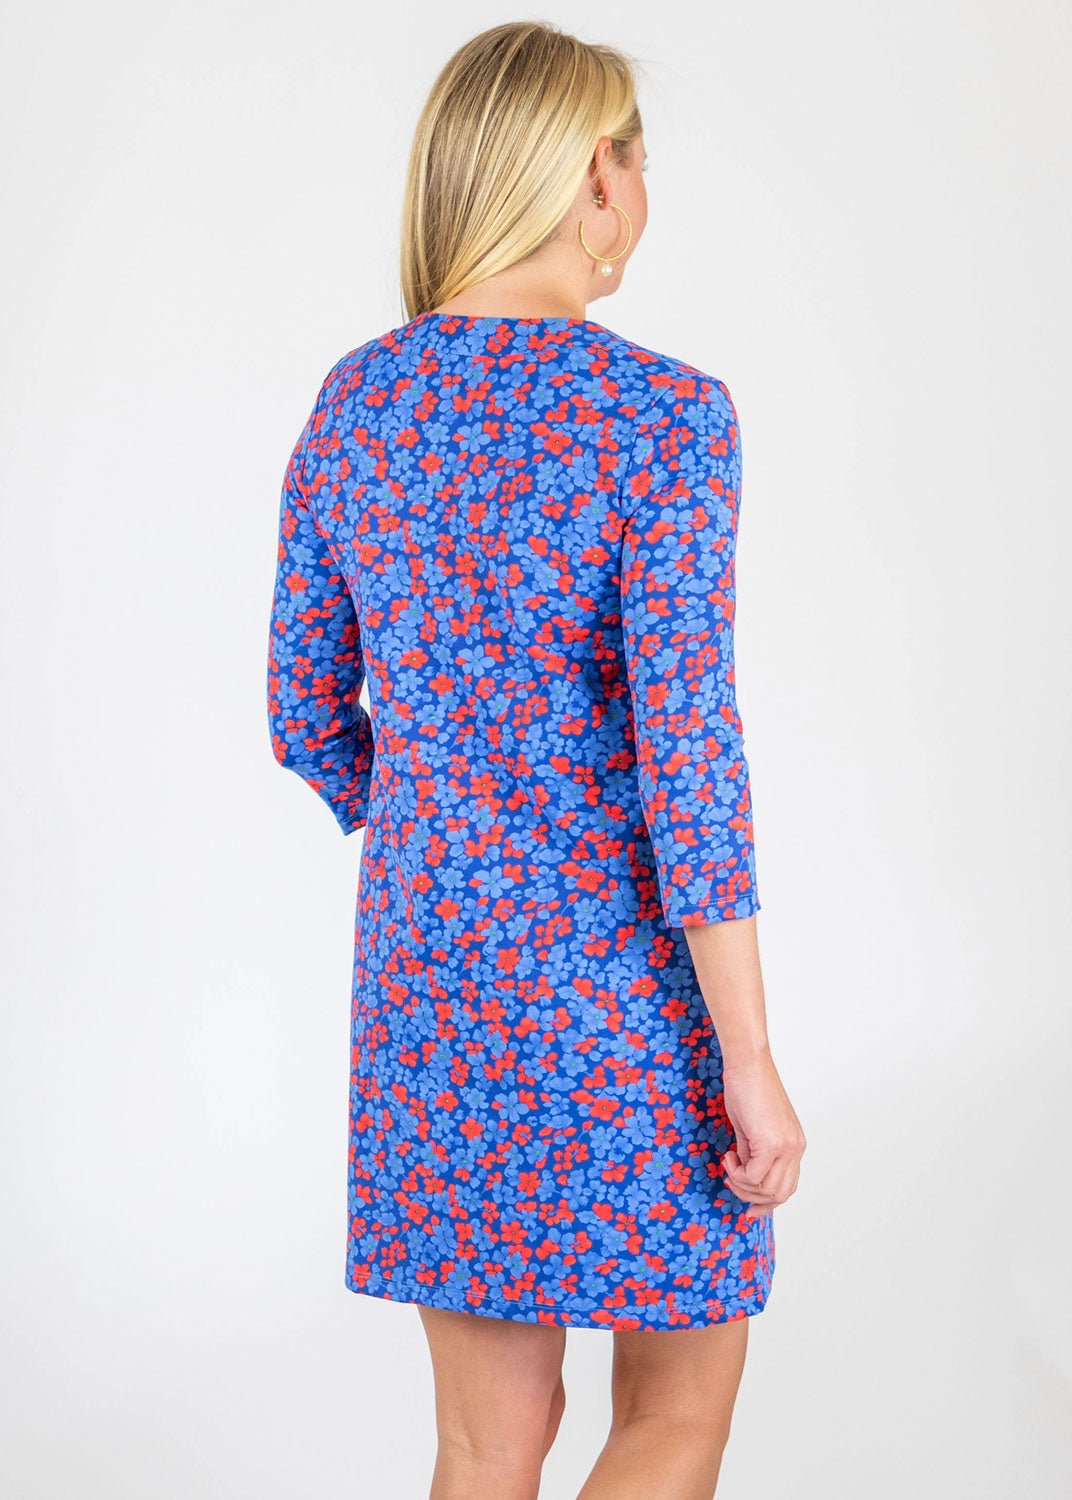 lucille-dress-3-4-sleeve-back-floral-blue-red_4eda7df4-a67a-431e-98fd-319c1f858615-532849.jpg